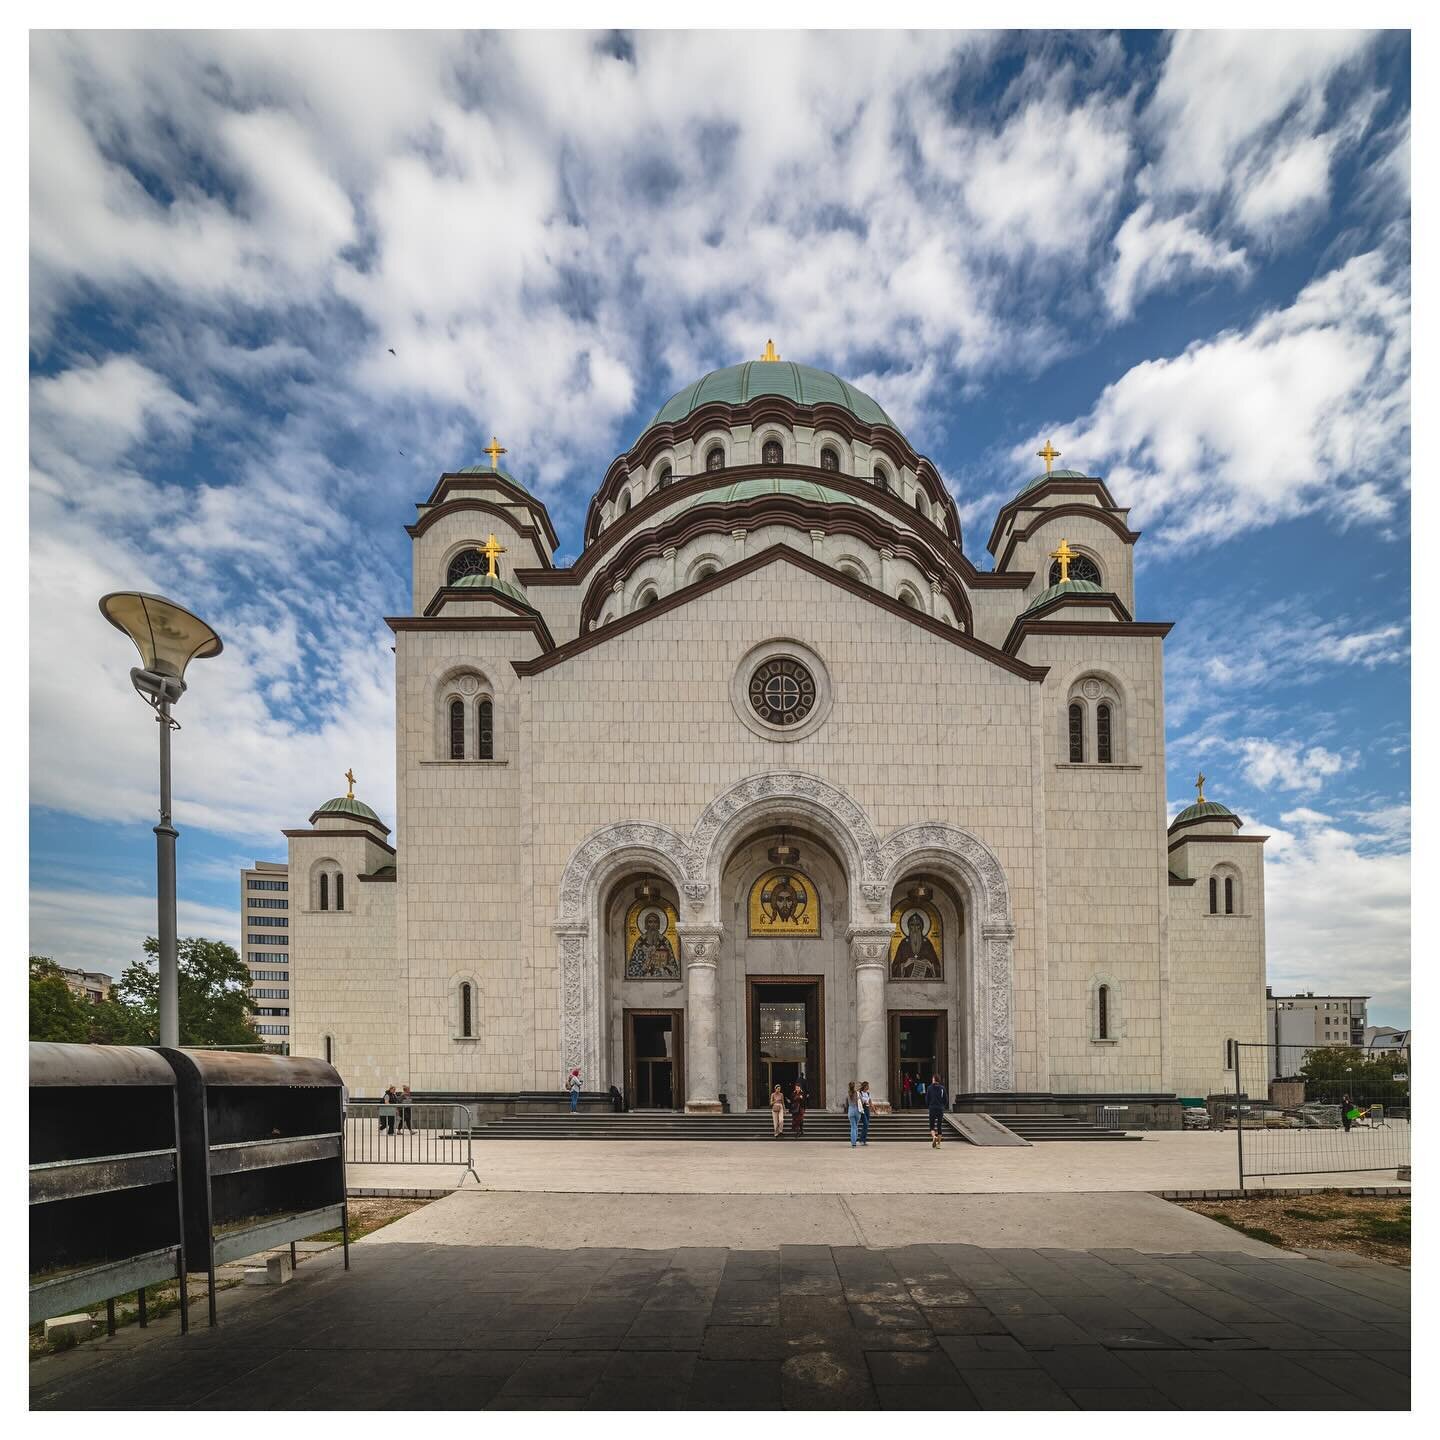 St. Sava Church, Belgrade, Serbia
.
.
.
.
.
#nikongreece #nikoneurope #nikondach #stsavachurch 

#nikonphotography #nikonz #zcreators #nikonz5

#opticalwander 

#nature #natgeo 

#igtravel #igdaily #instagrammers #igers #instalove #instamood #instago